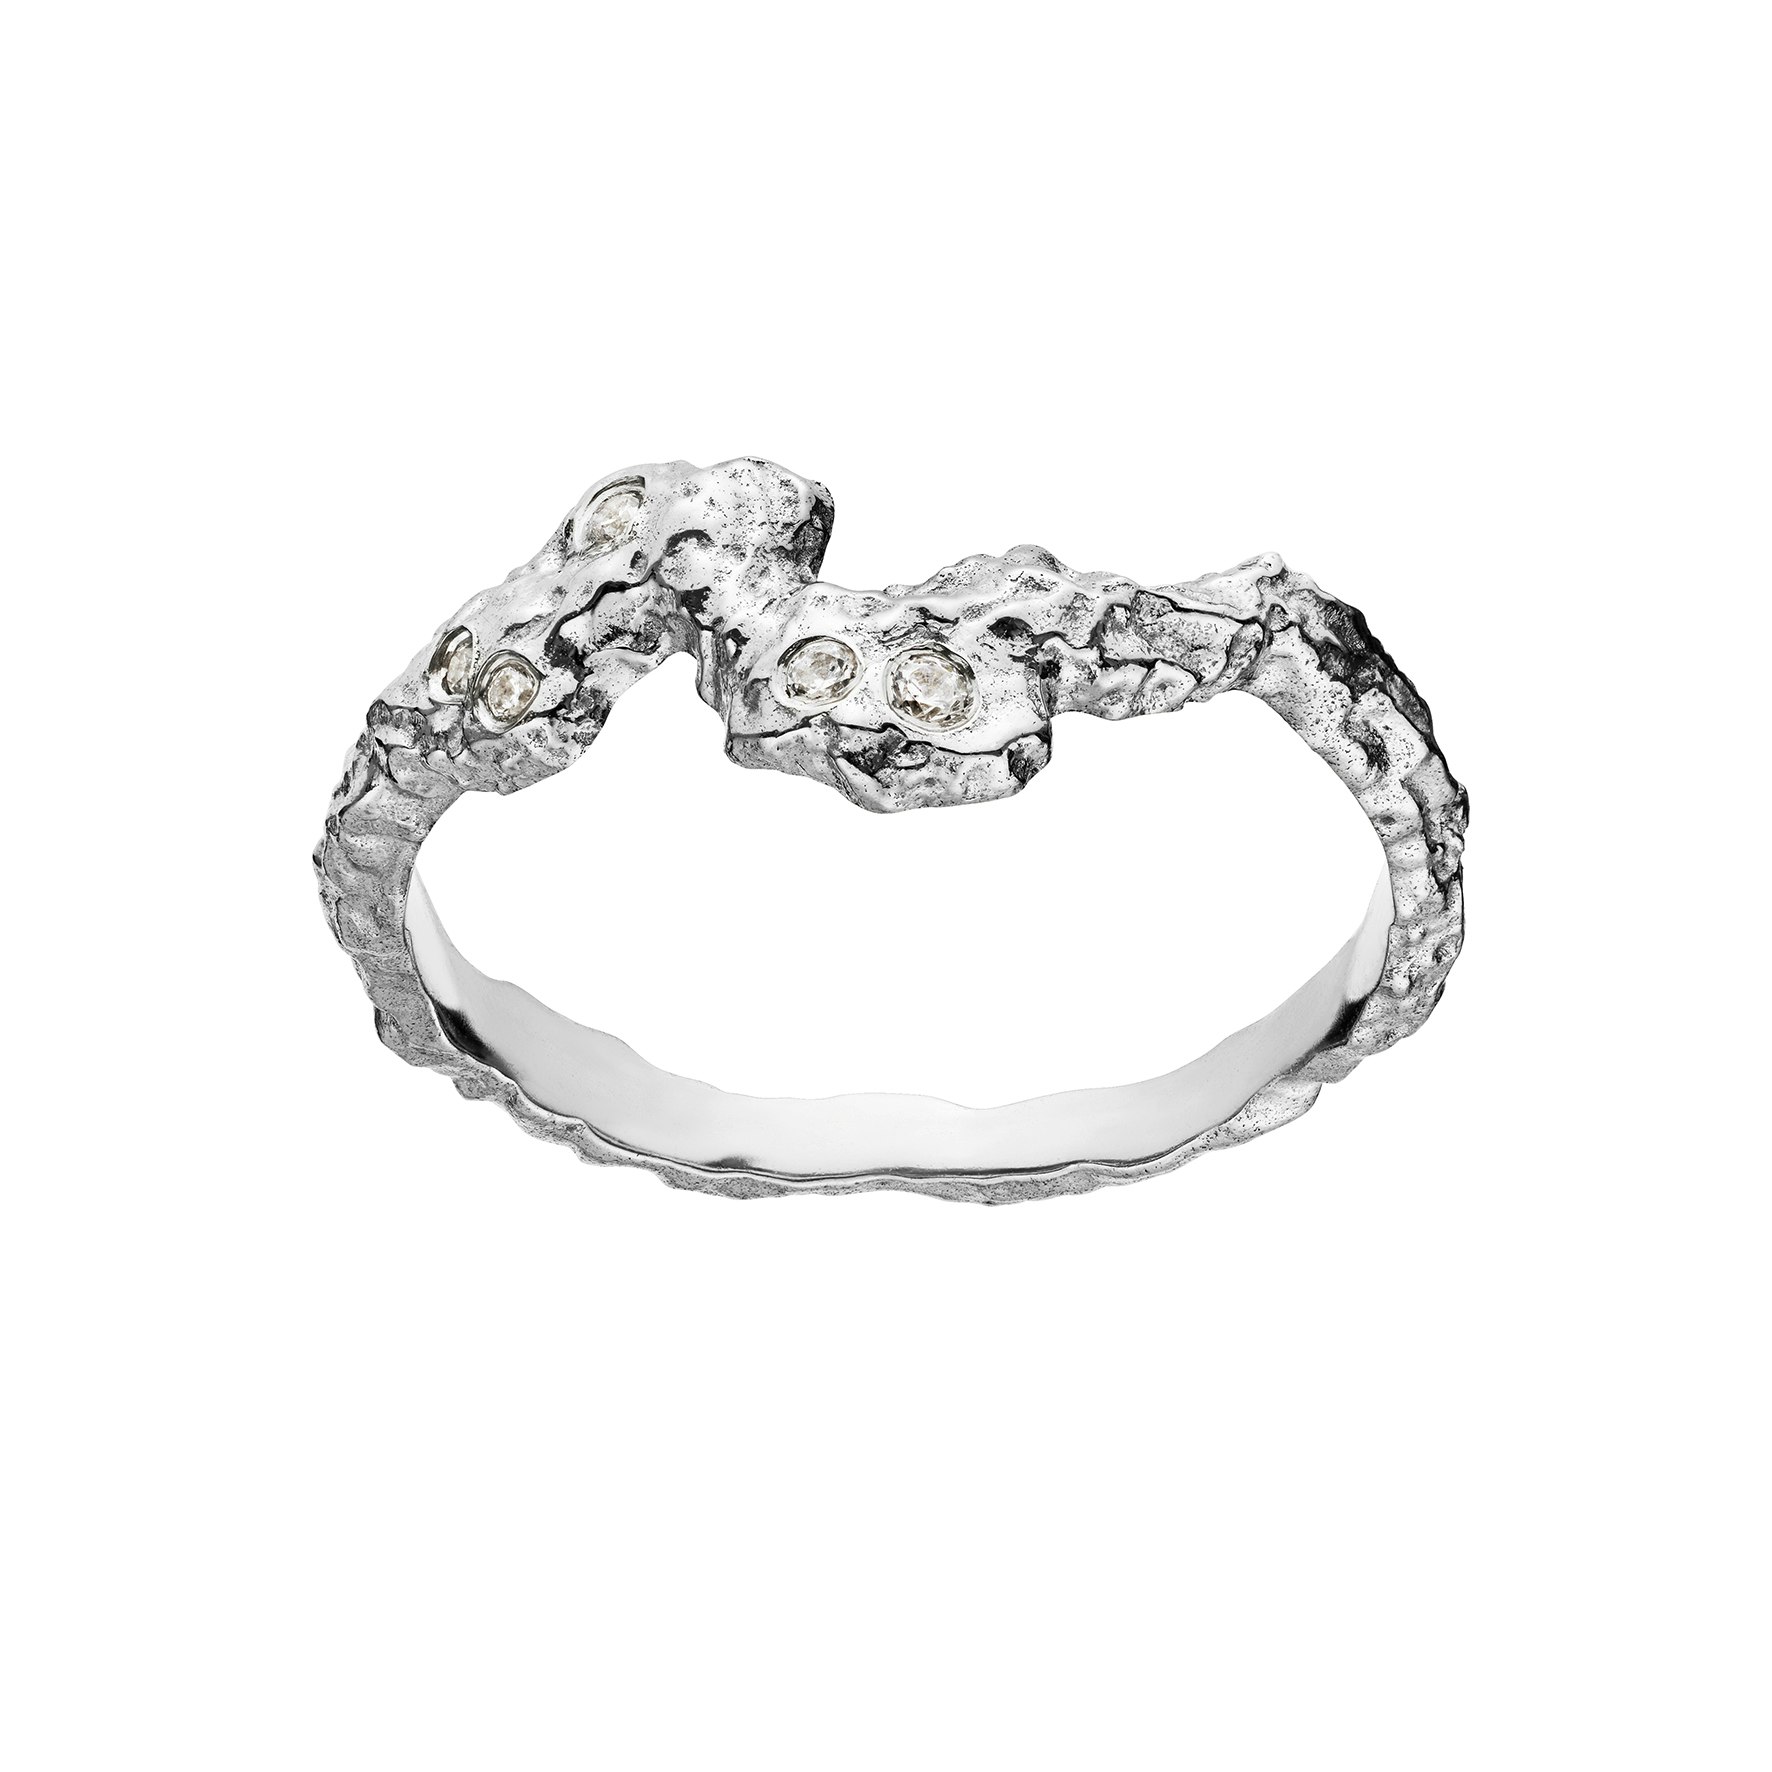 Frida Ring from Maanesten in Silver Sterling 925